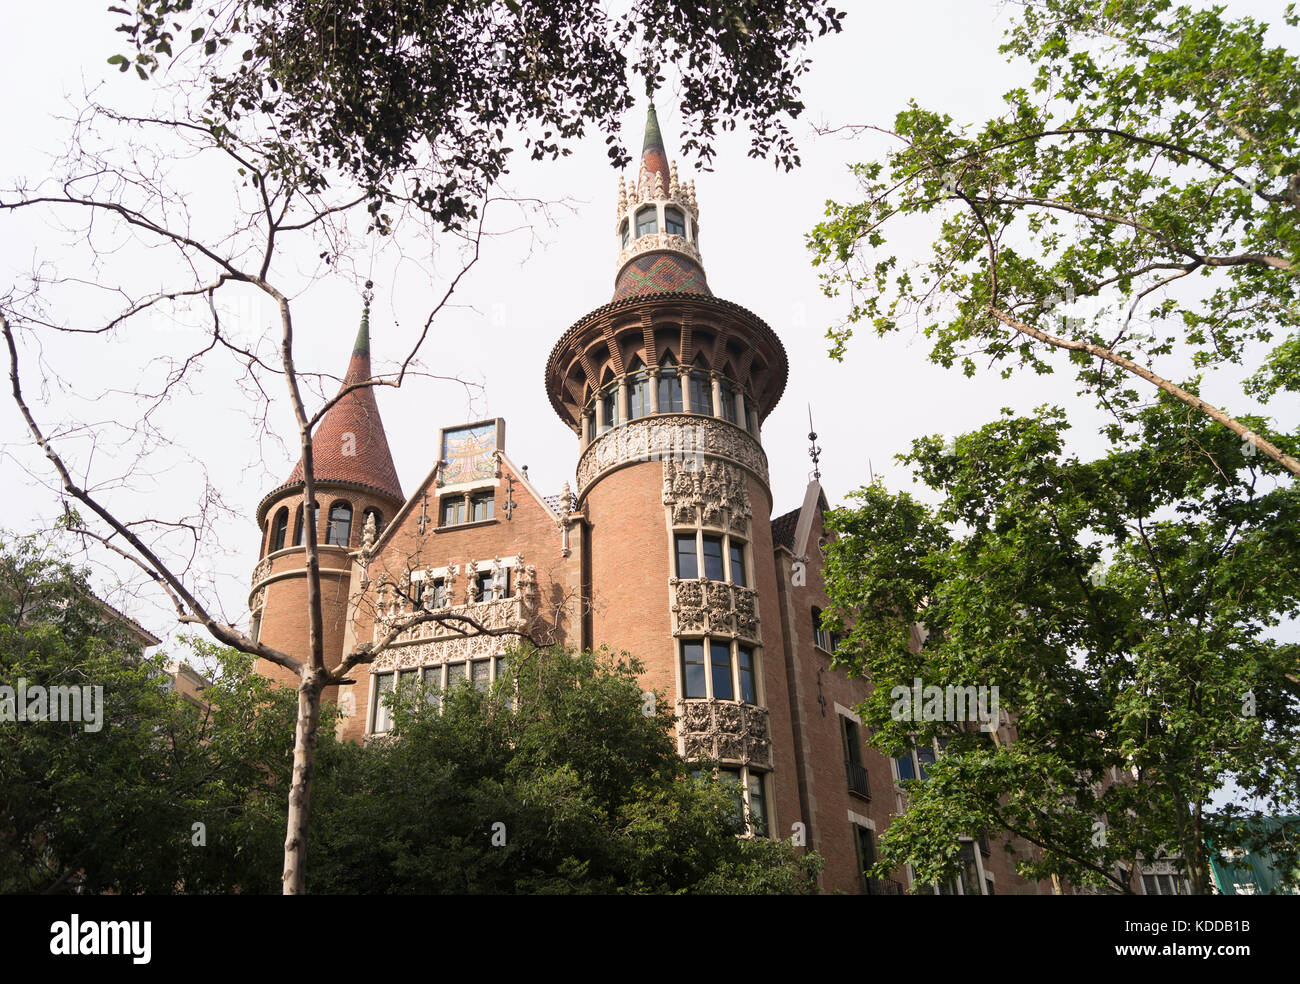 La casa de les Punxes o casa terradas está situado en la avenida Diagonal de Barcelona. Foto de stock